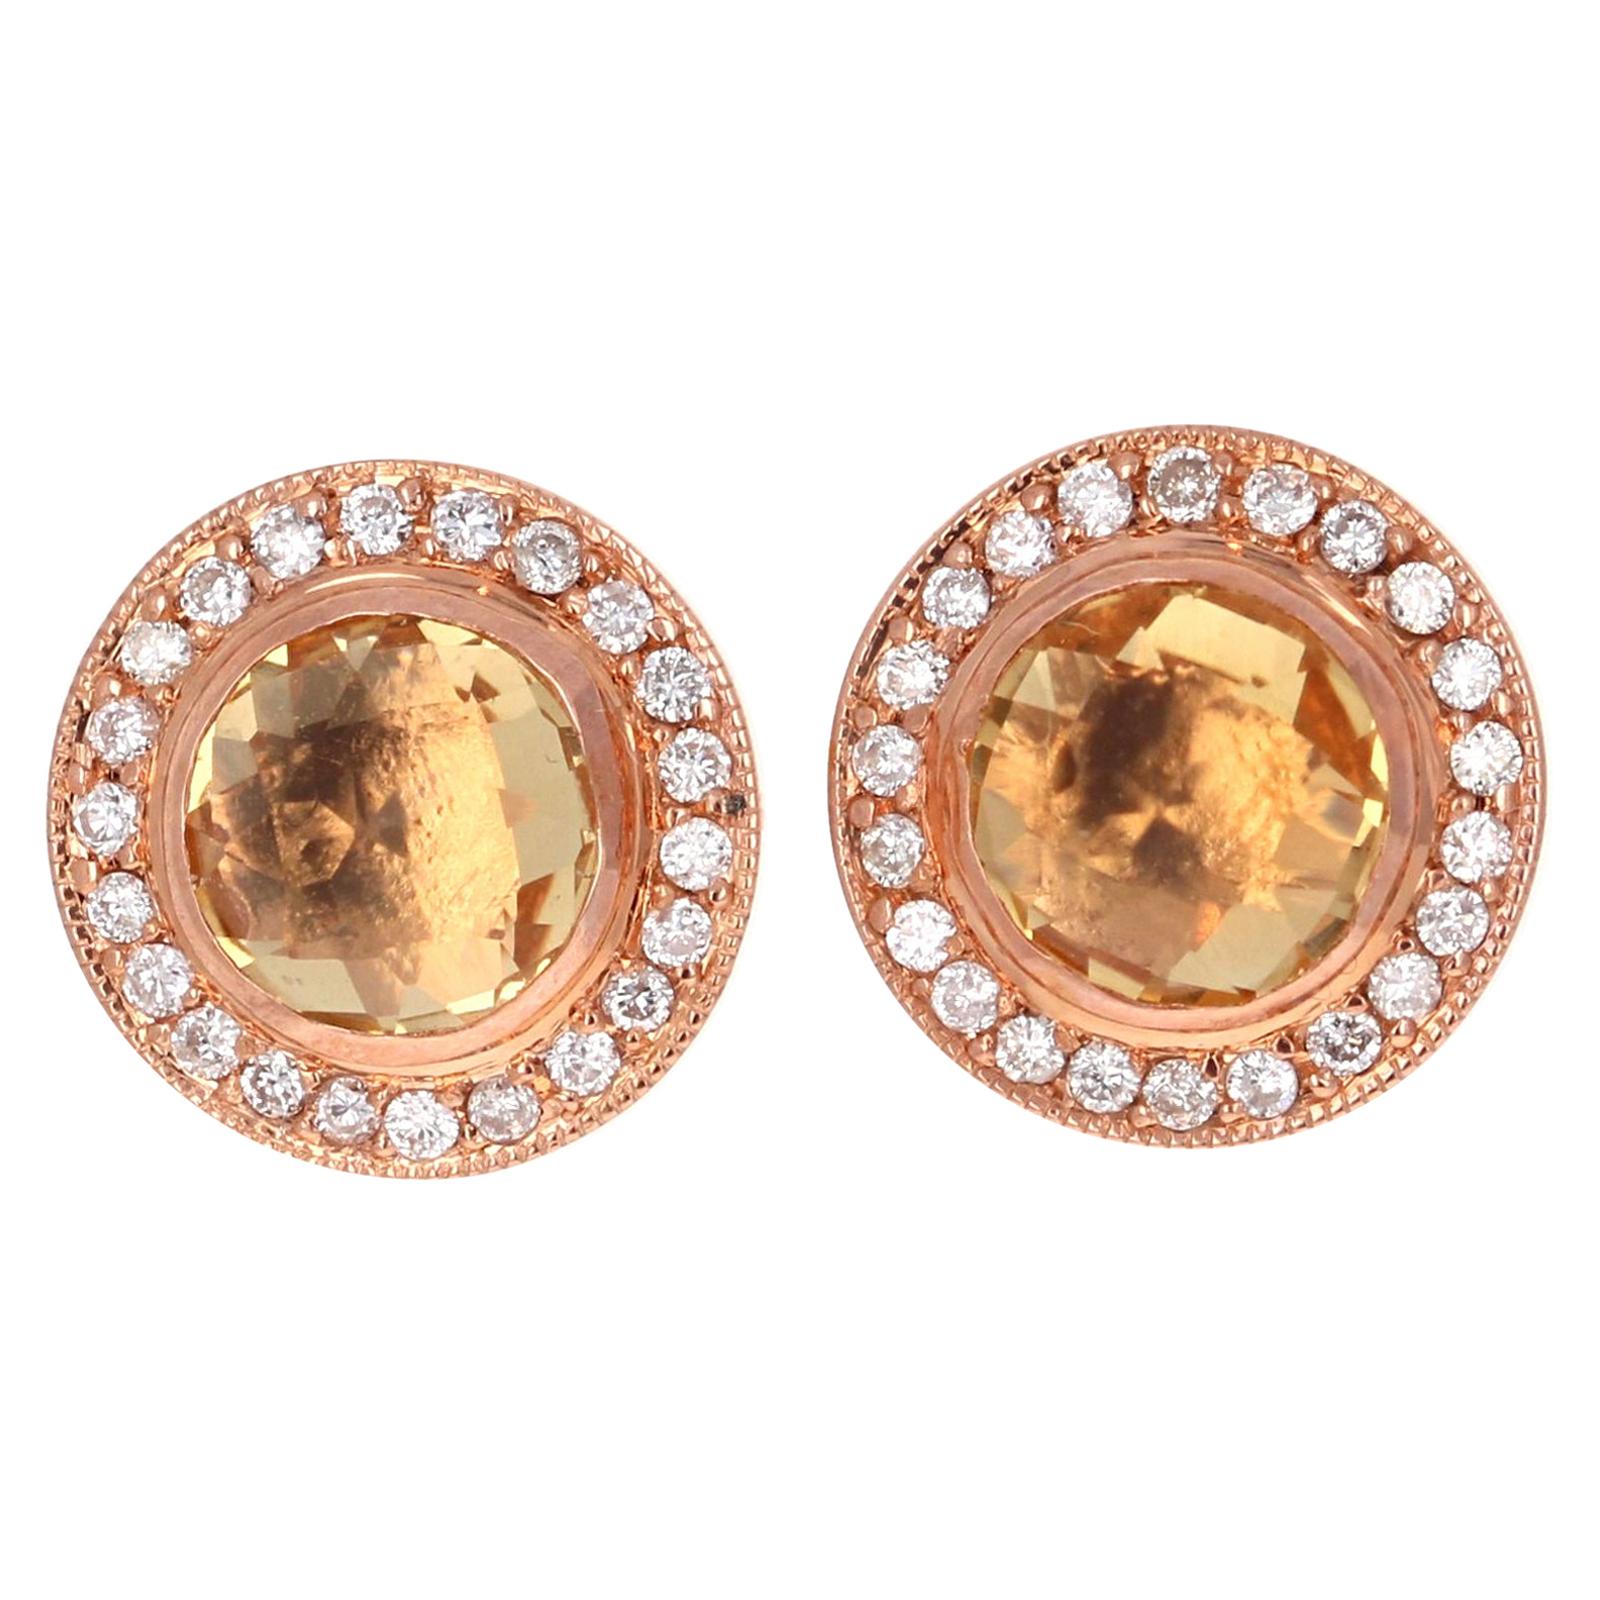 1.86 Carat Round Cut Citrine Diamond 14 Karat Rose Gold Earring Studs For Sale